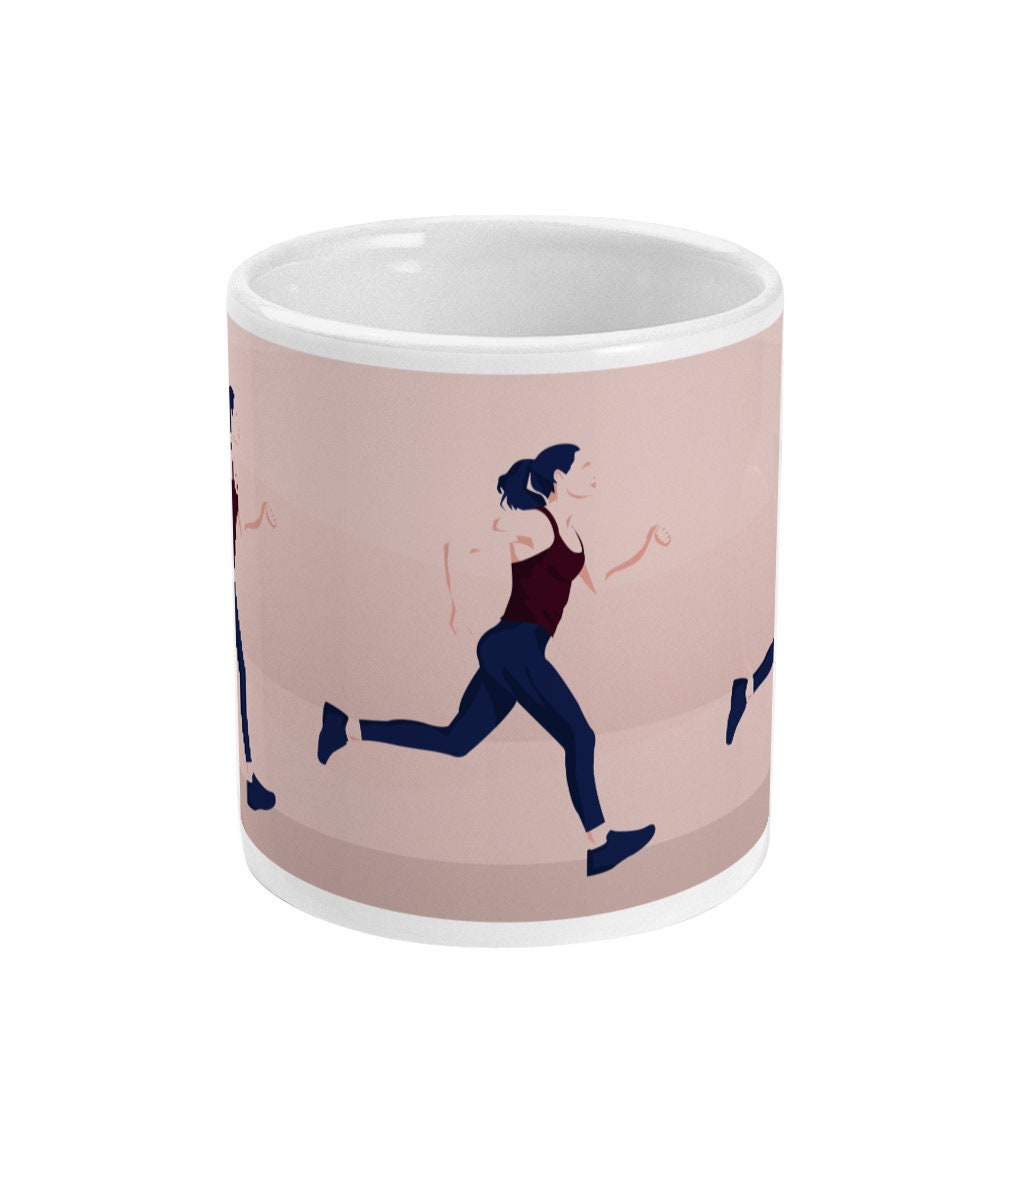 Running cup or mug "A woman who runs" - Customizable